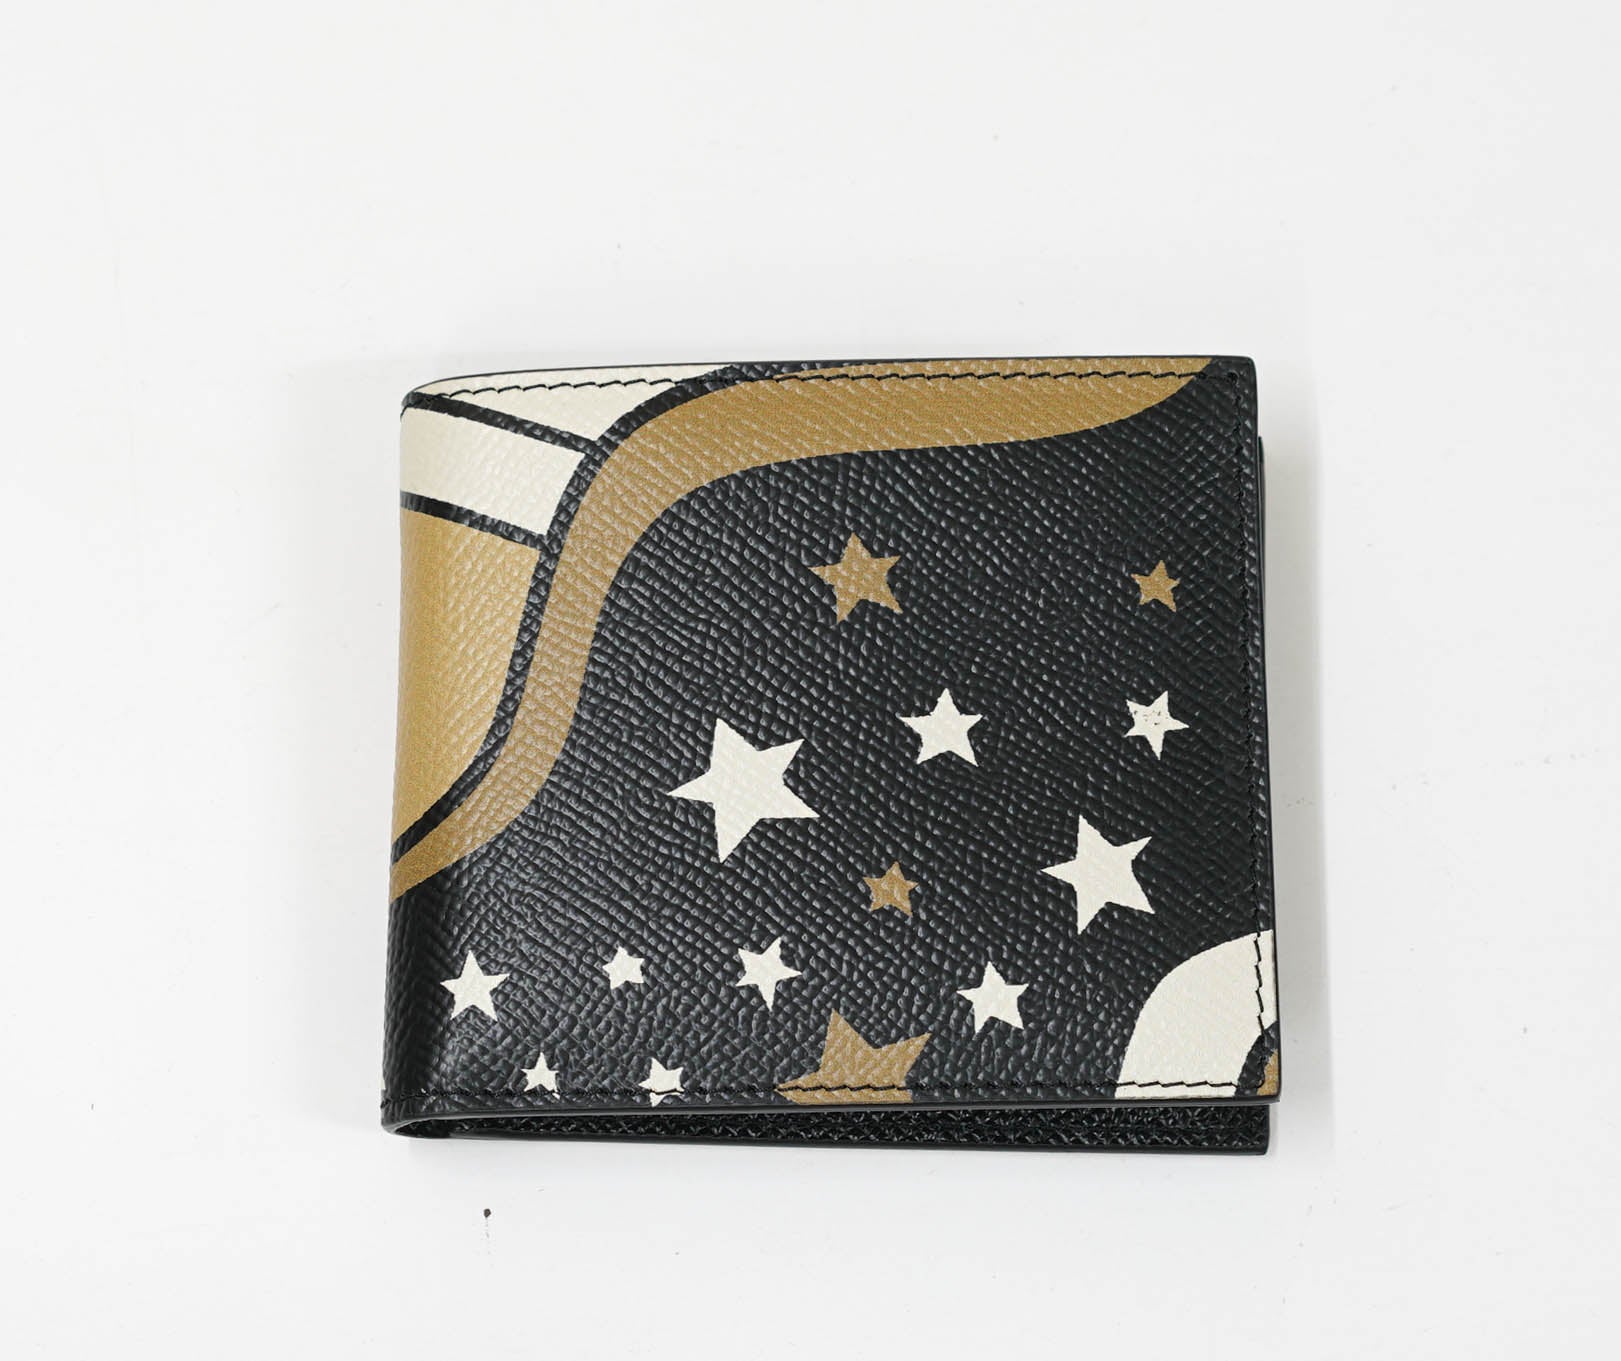 Dolce & Gabbana Men's Gold Star Leather Wallet